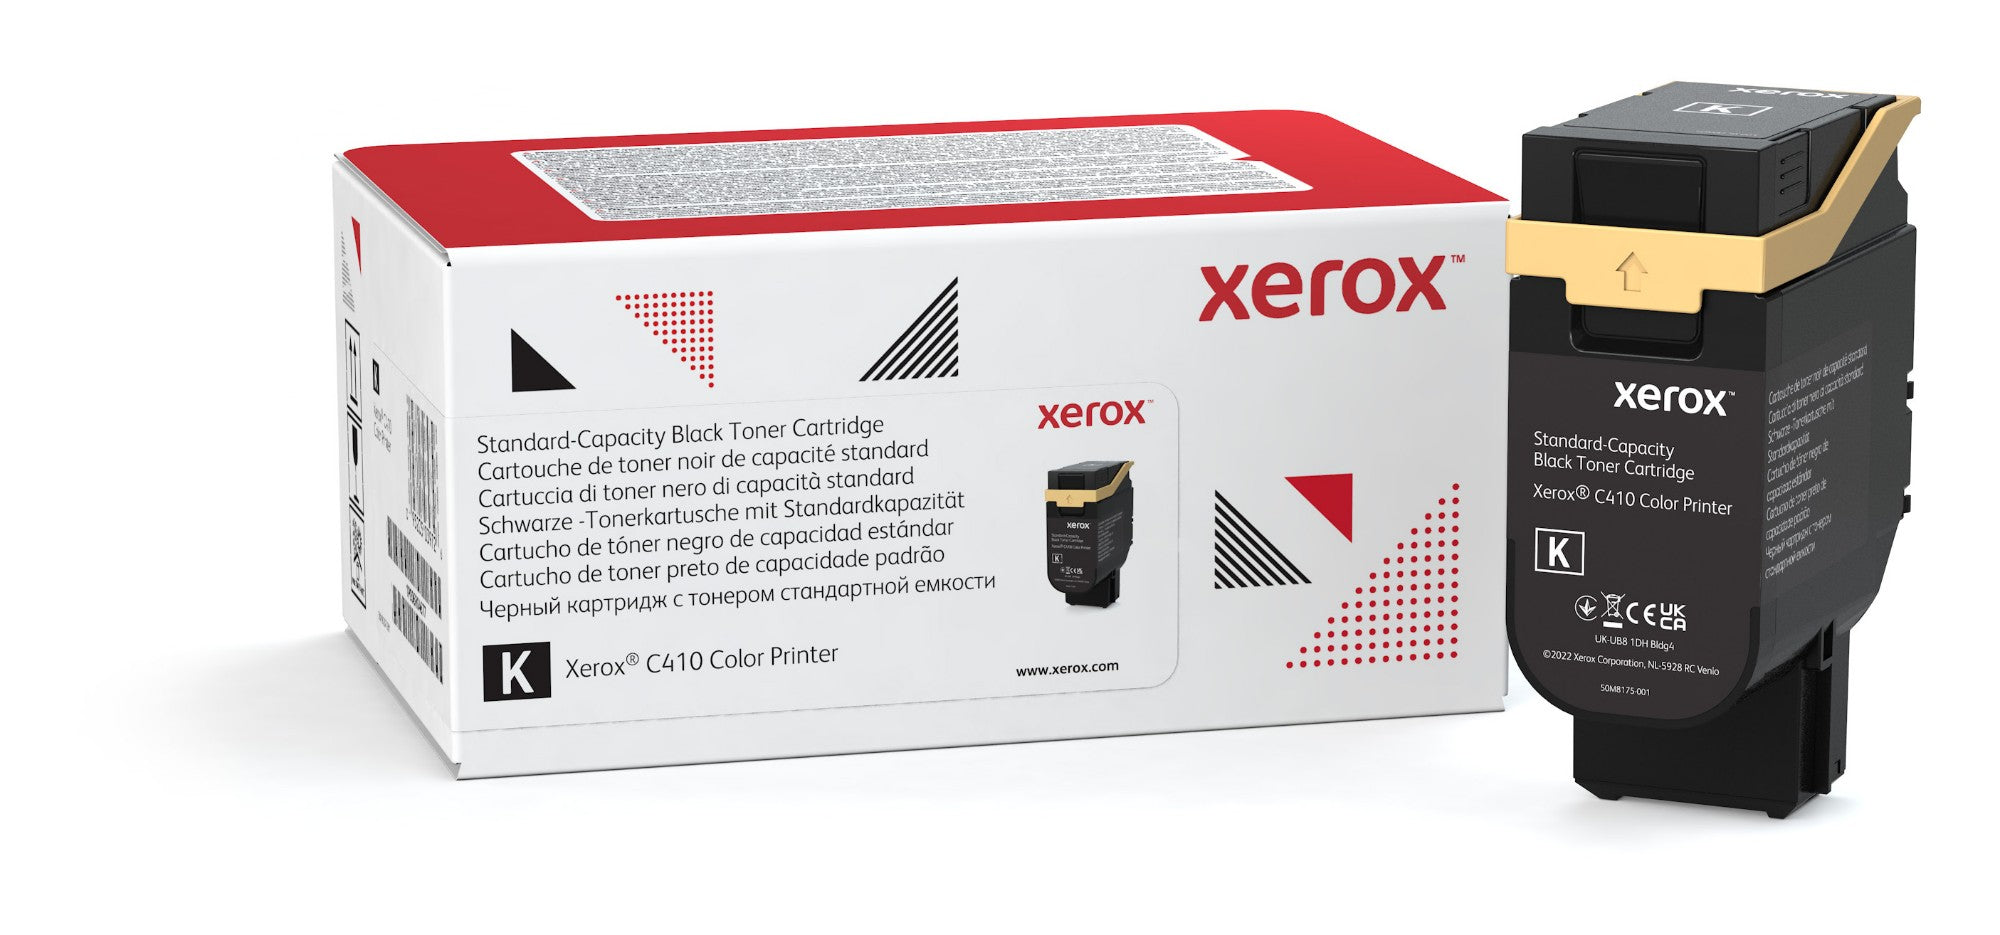 Xerox 006R04677 Toner-kit black, 2.4K pages ISO/IEC 19752 for Xerox VersaLink C 410